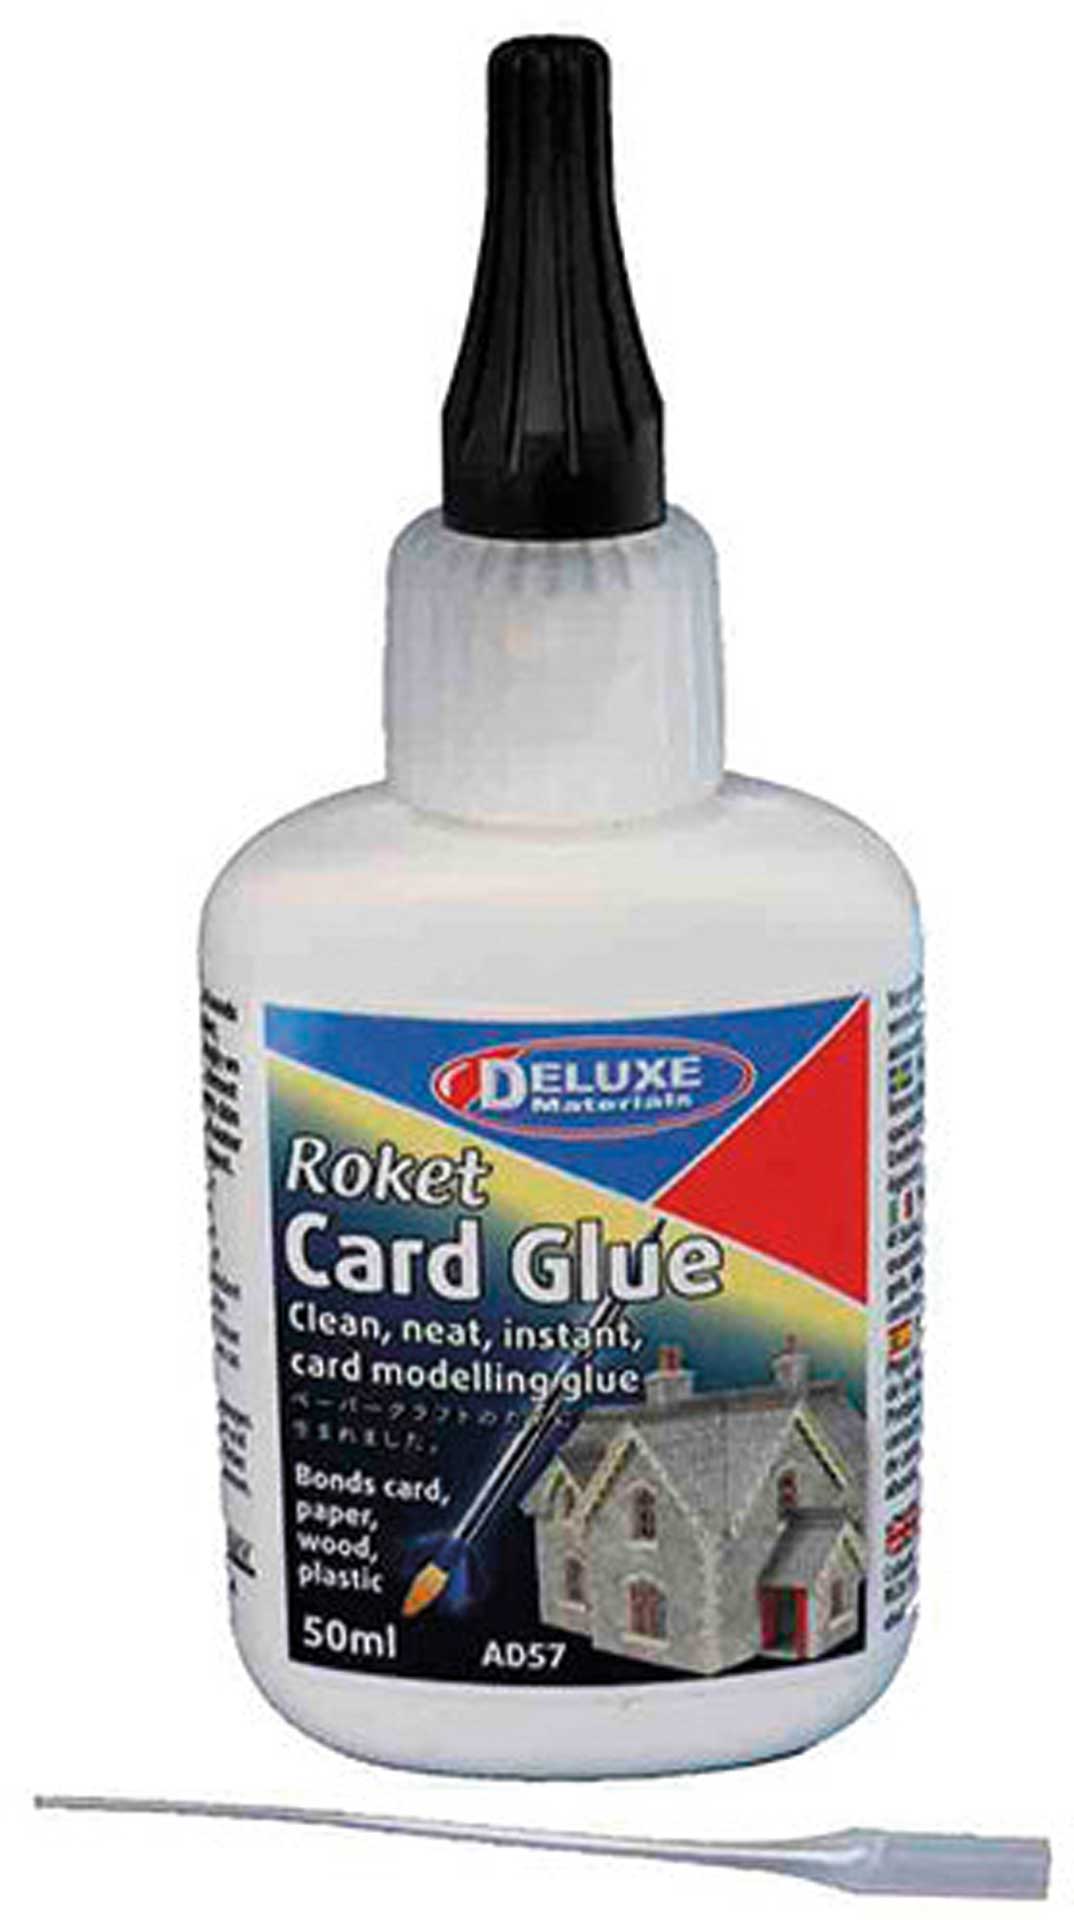 DELUXE Roket Card Glue 50ml for cardboard, paper. etc.